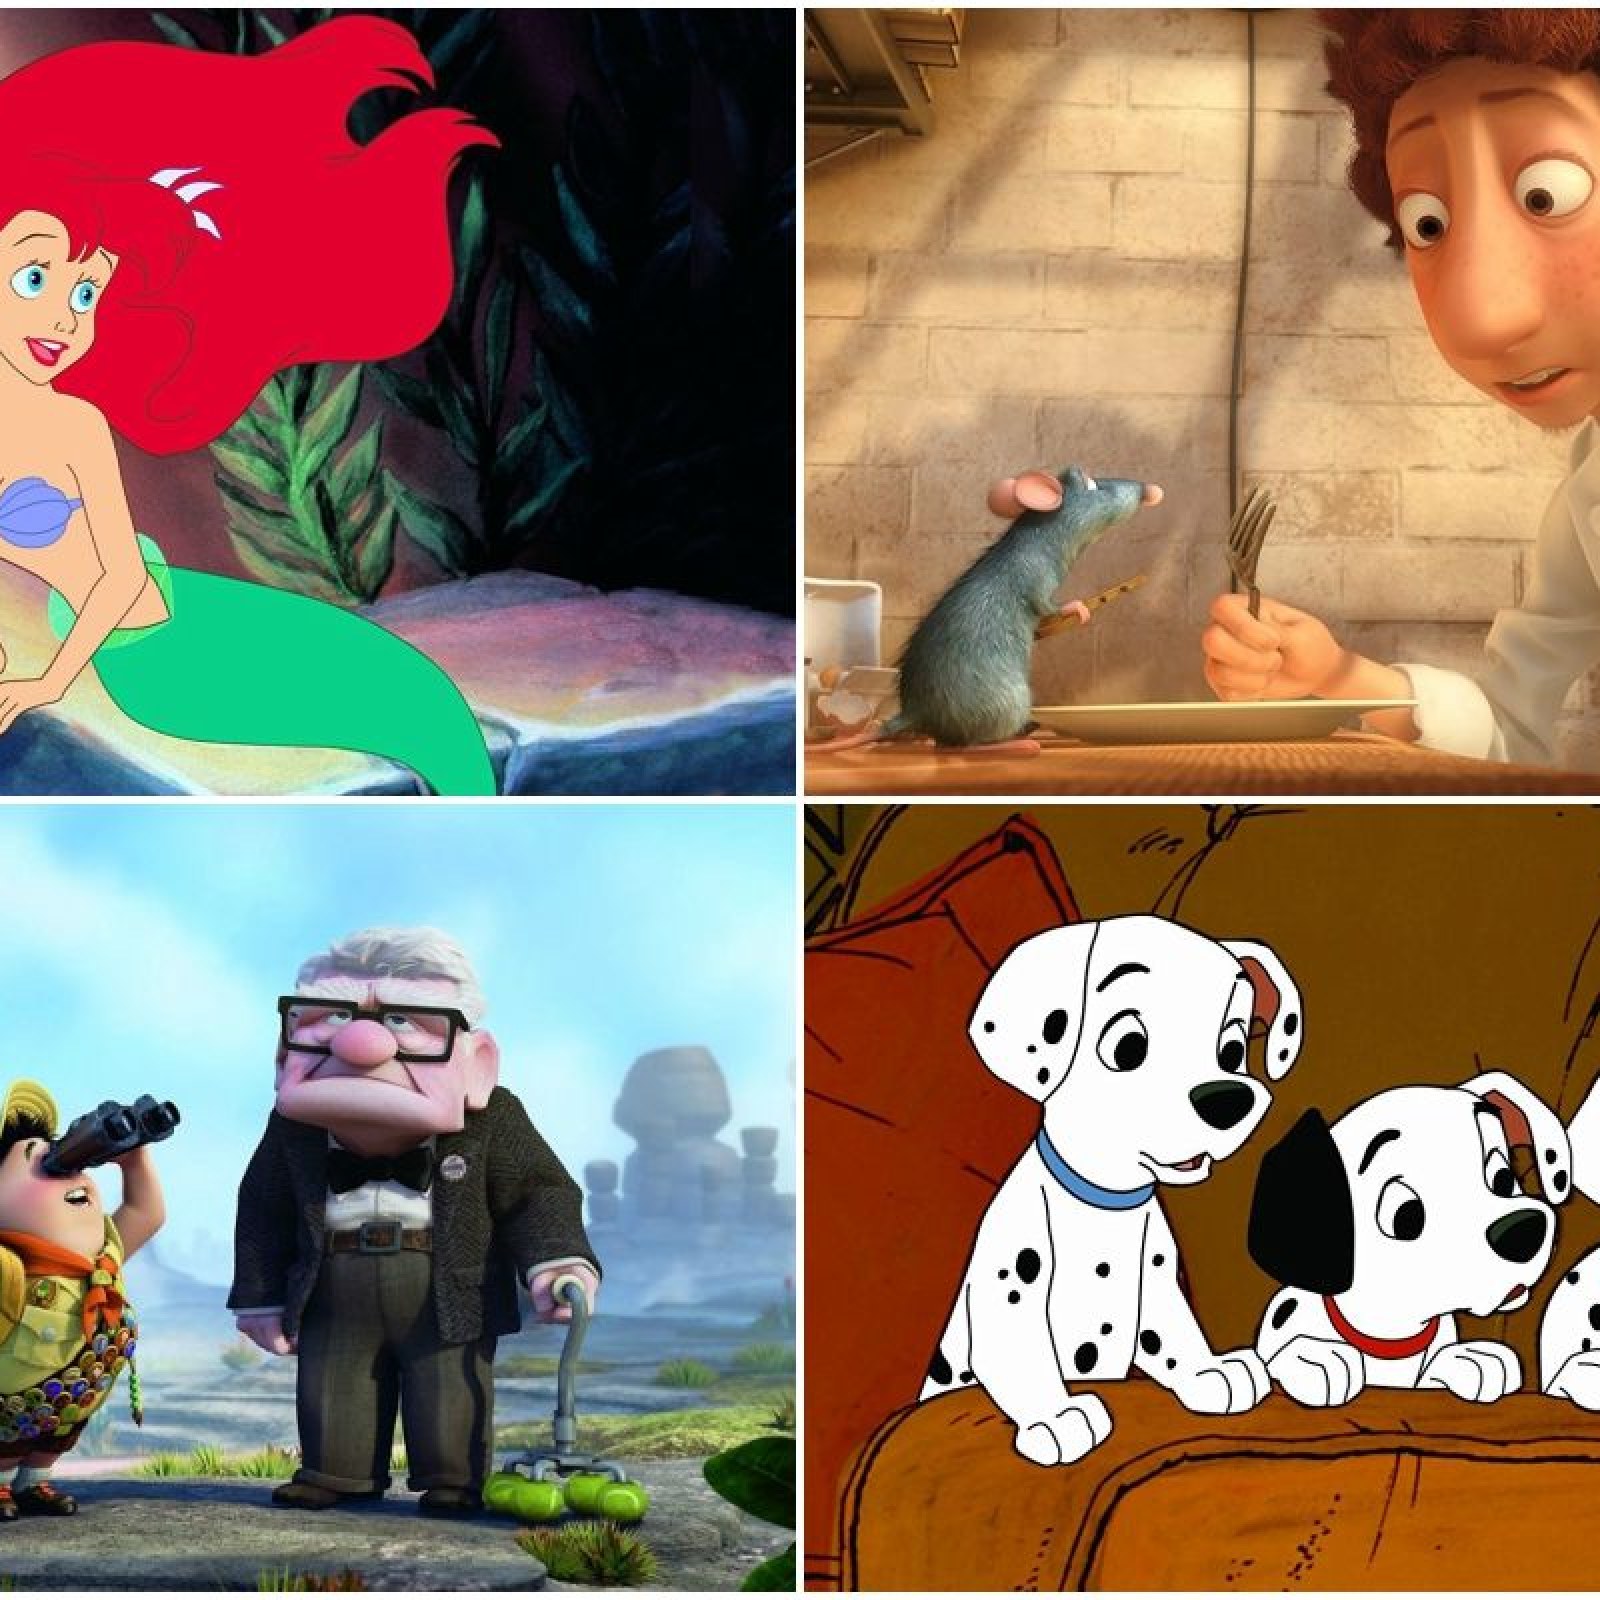 The Animated Disney Ranked